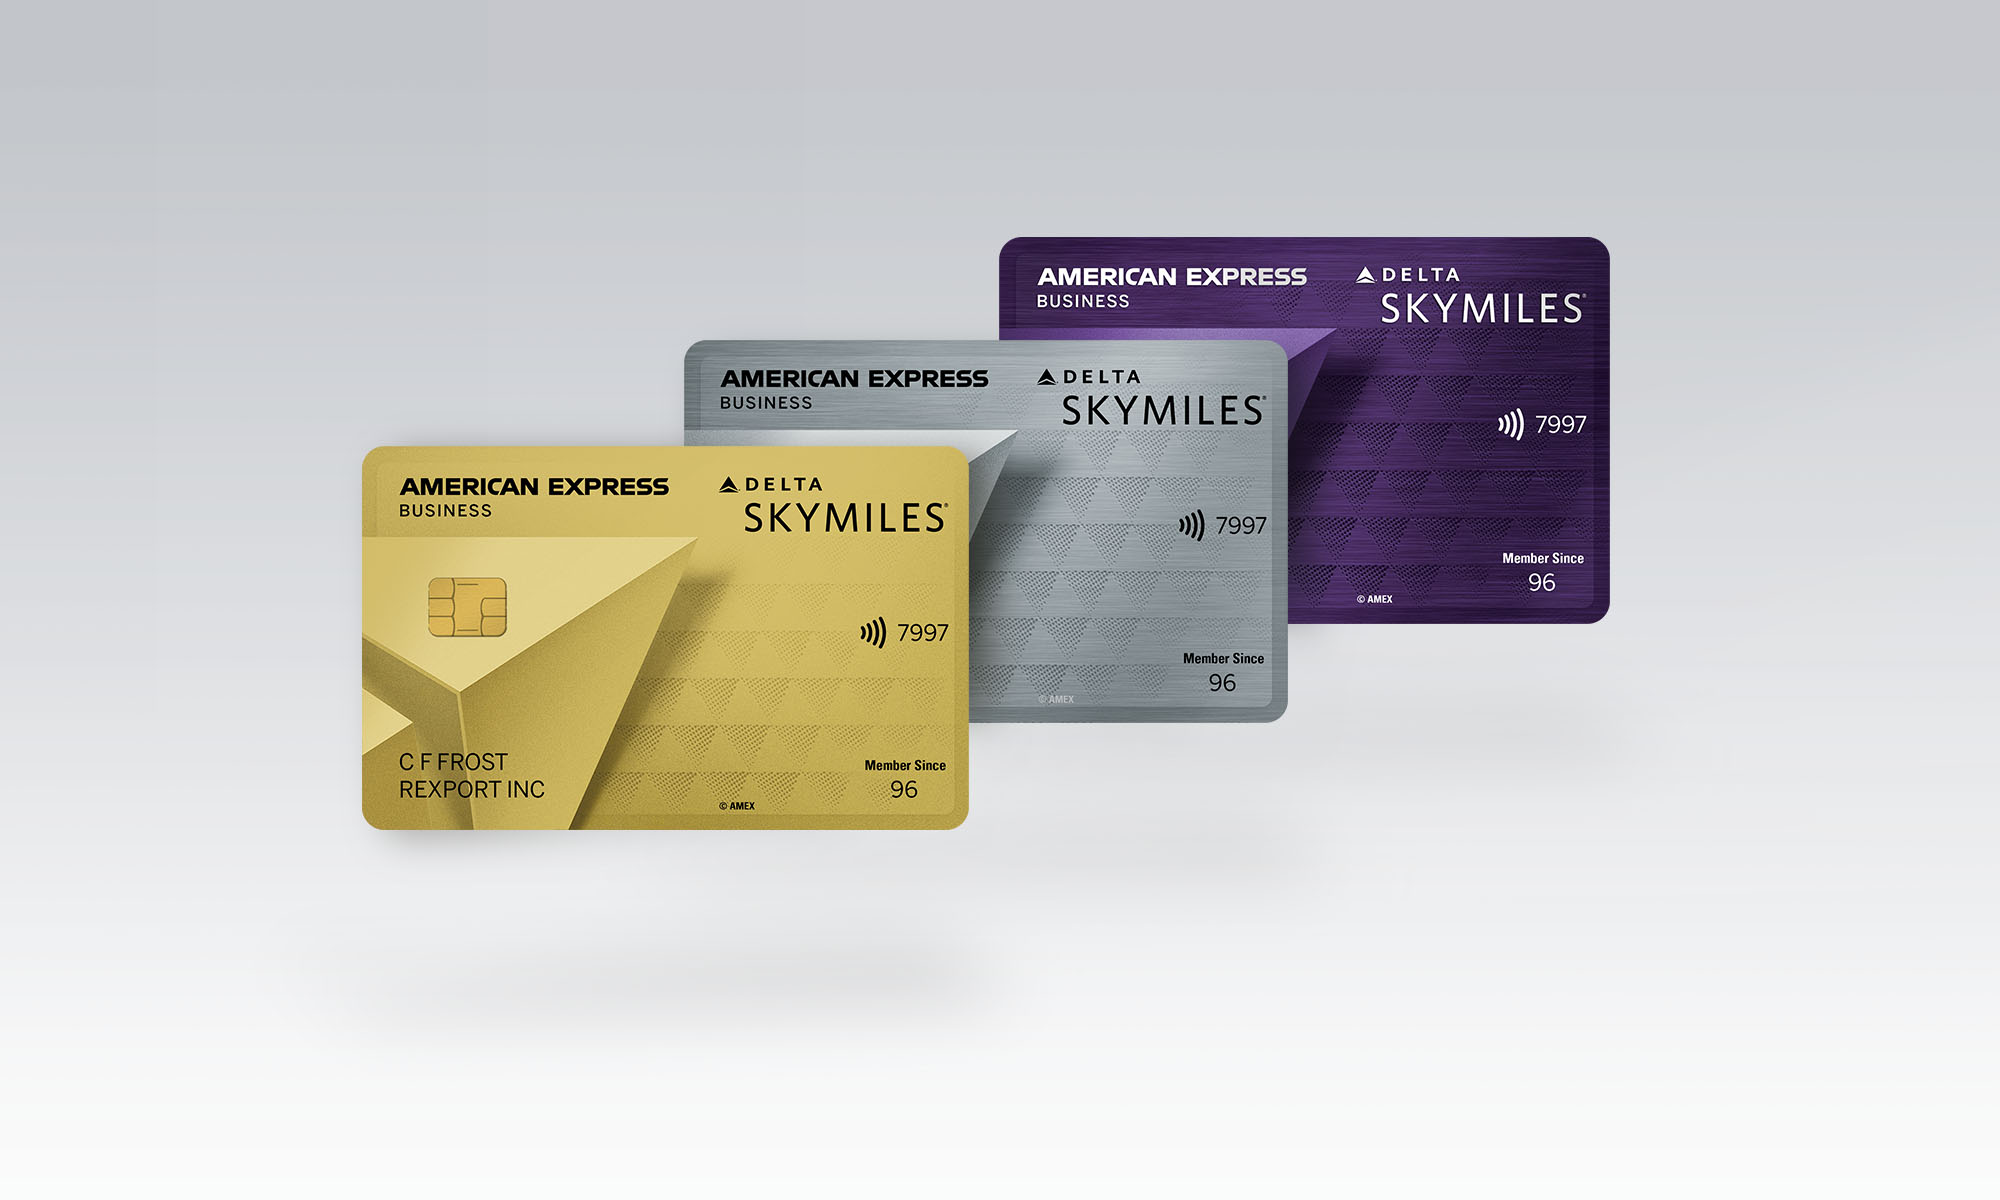 Amex Delta SkyMiles Business Cards Spending Bonus